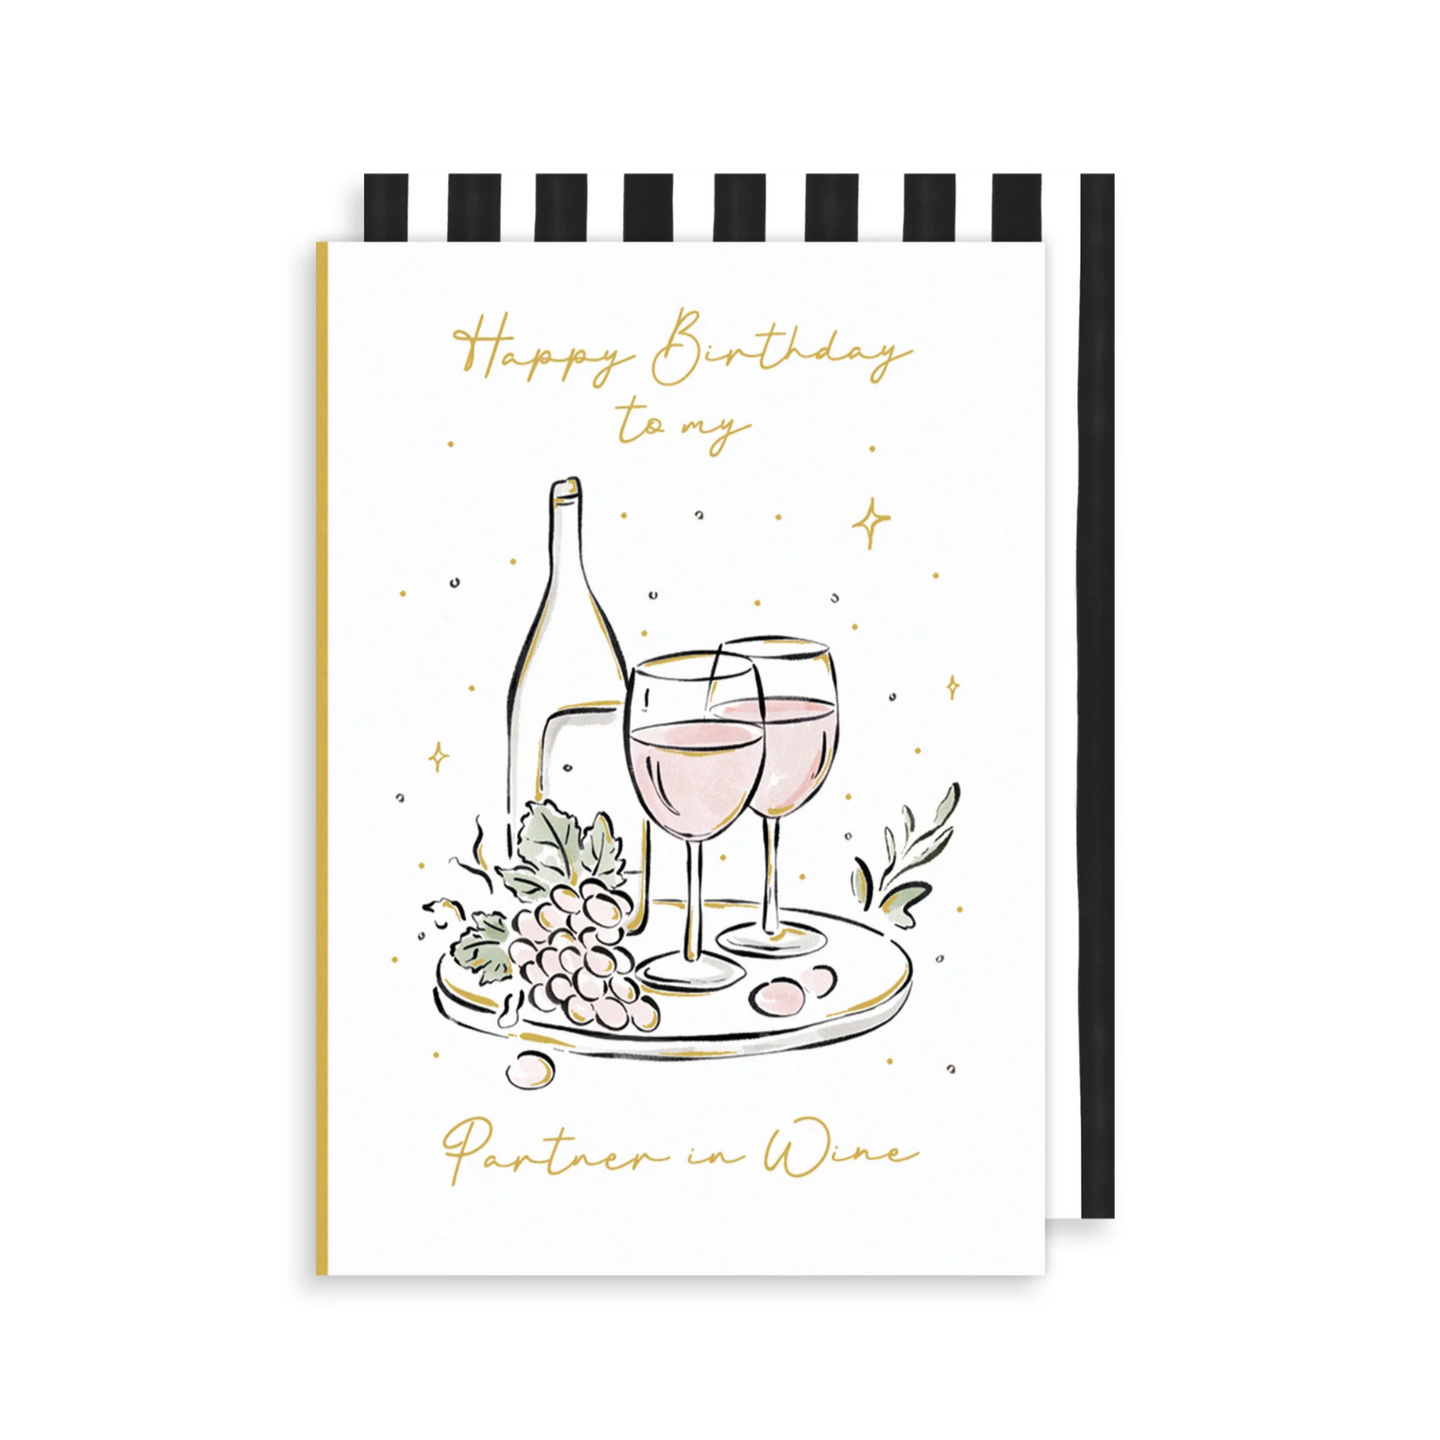 The Art File Partner in Wine Card